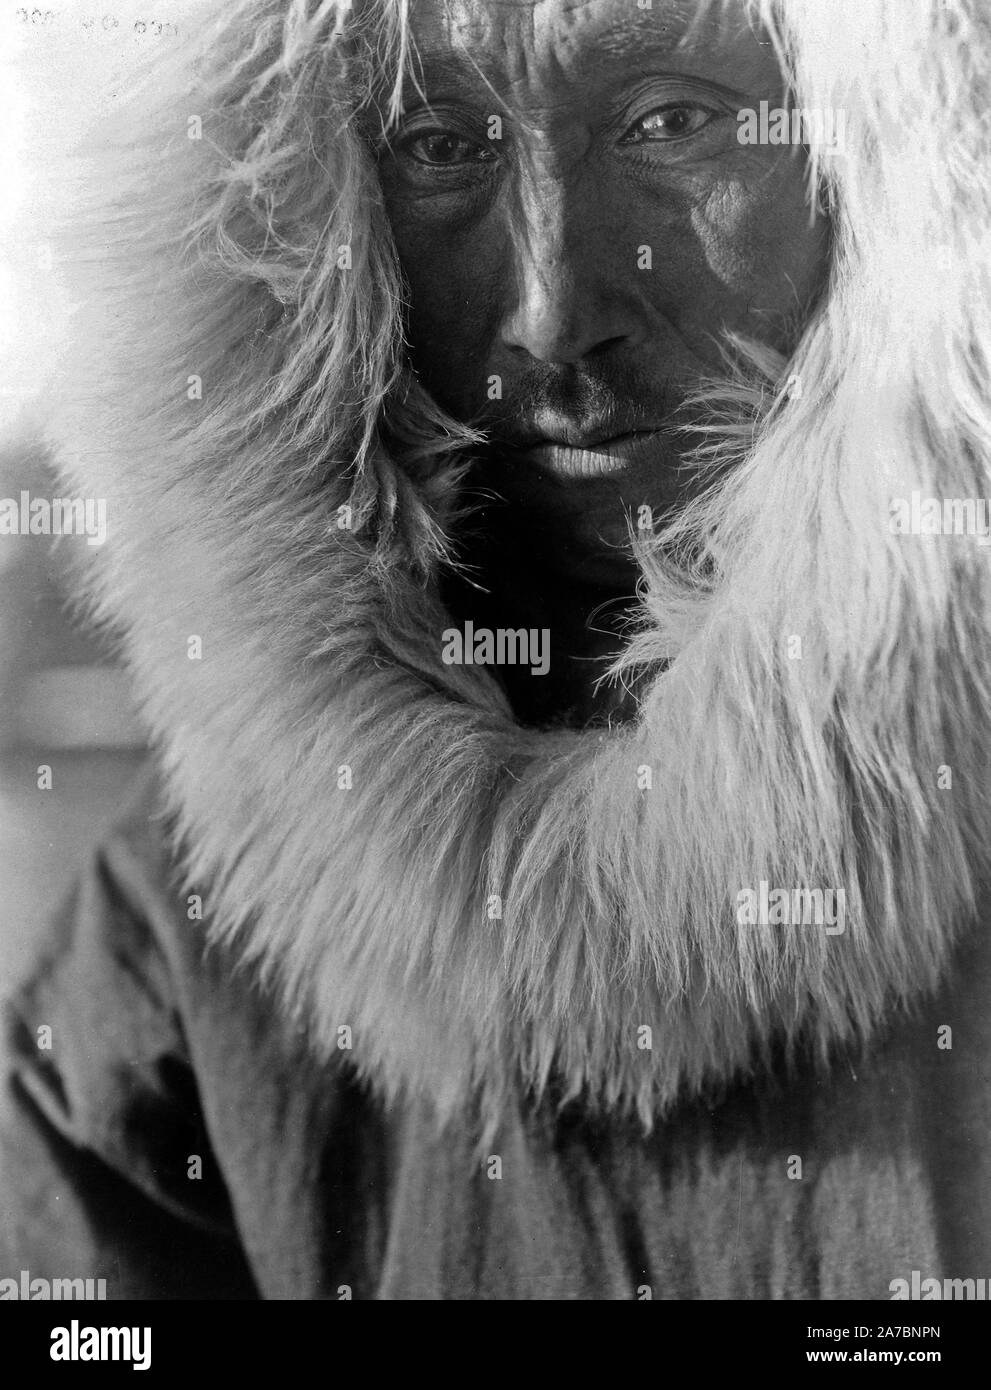 American eskimo Black and White Stock Photos & Images - Alamy